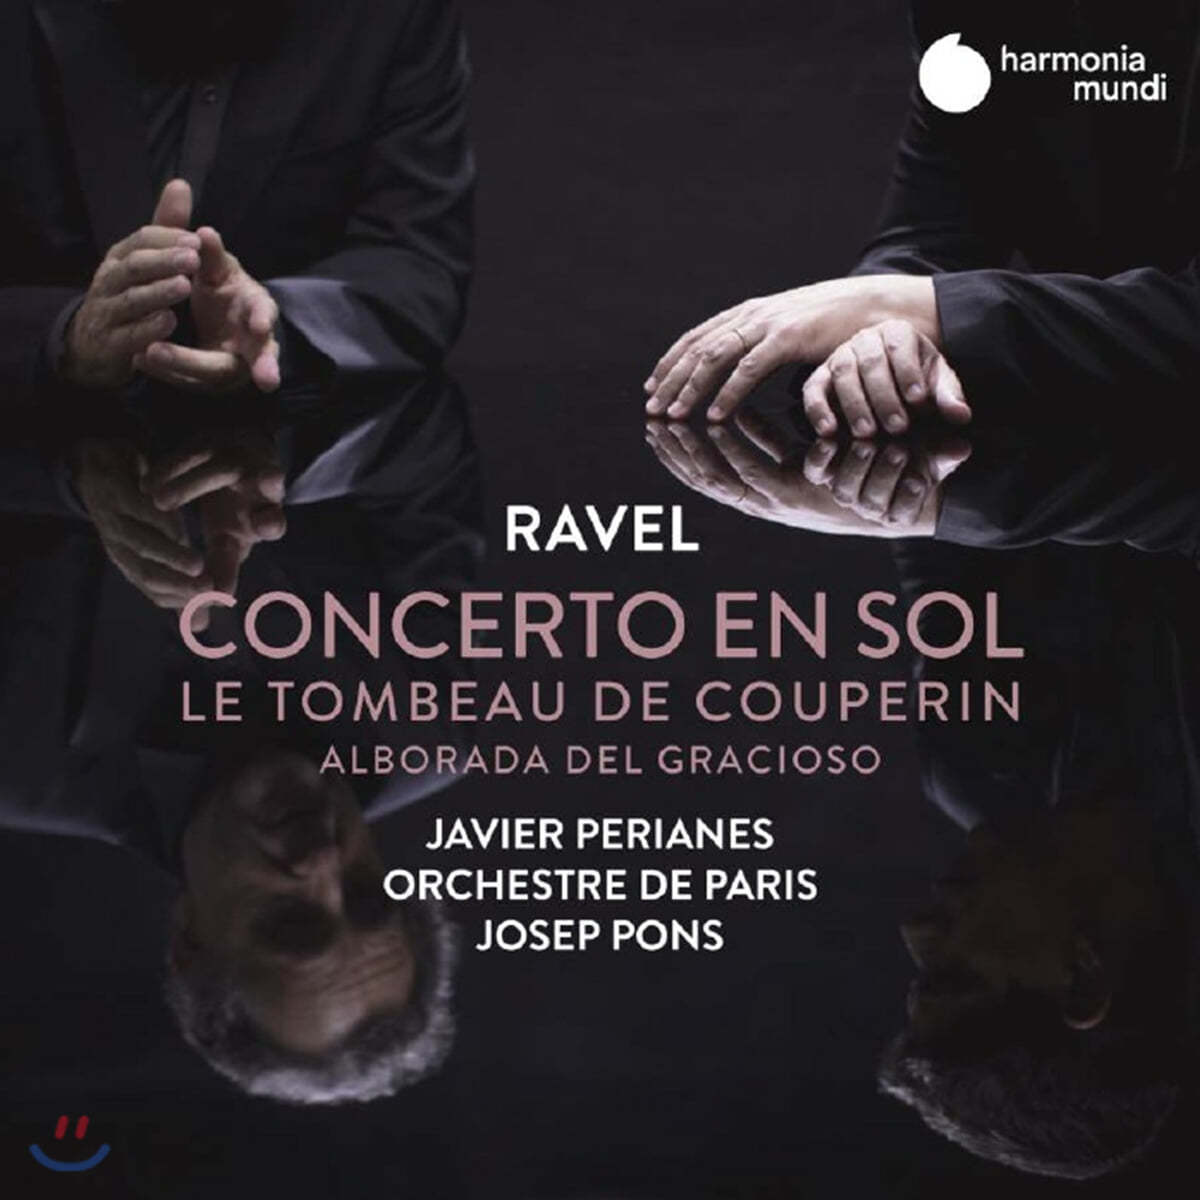 Javier Perianes 라벨: 어릿광대의 아침 노래, 쿠프랭의 무덤 외 (Ravel: Jeux de Miroirs)